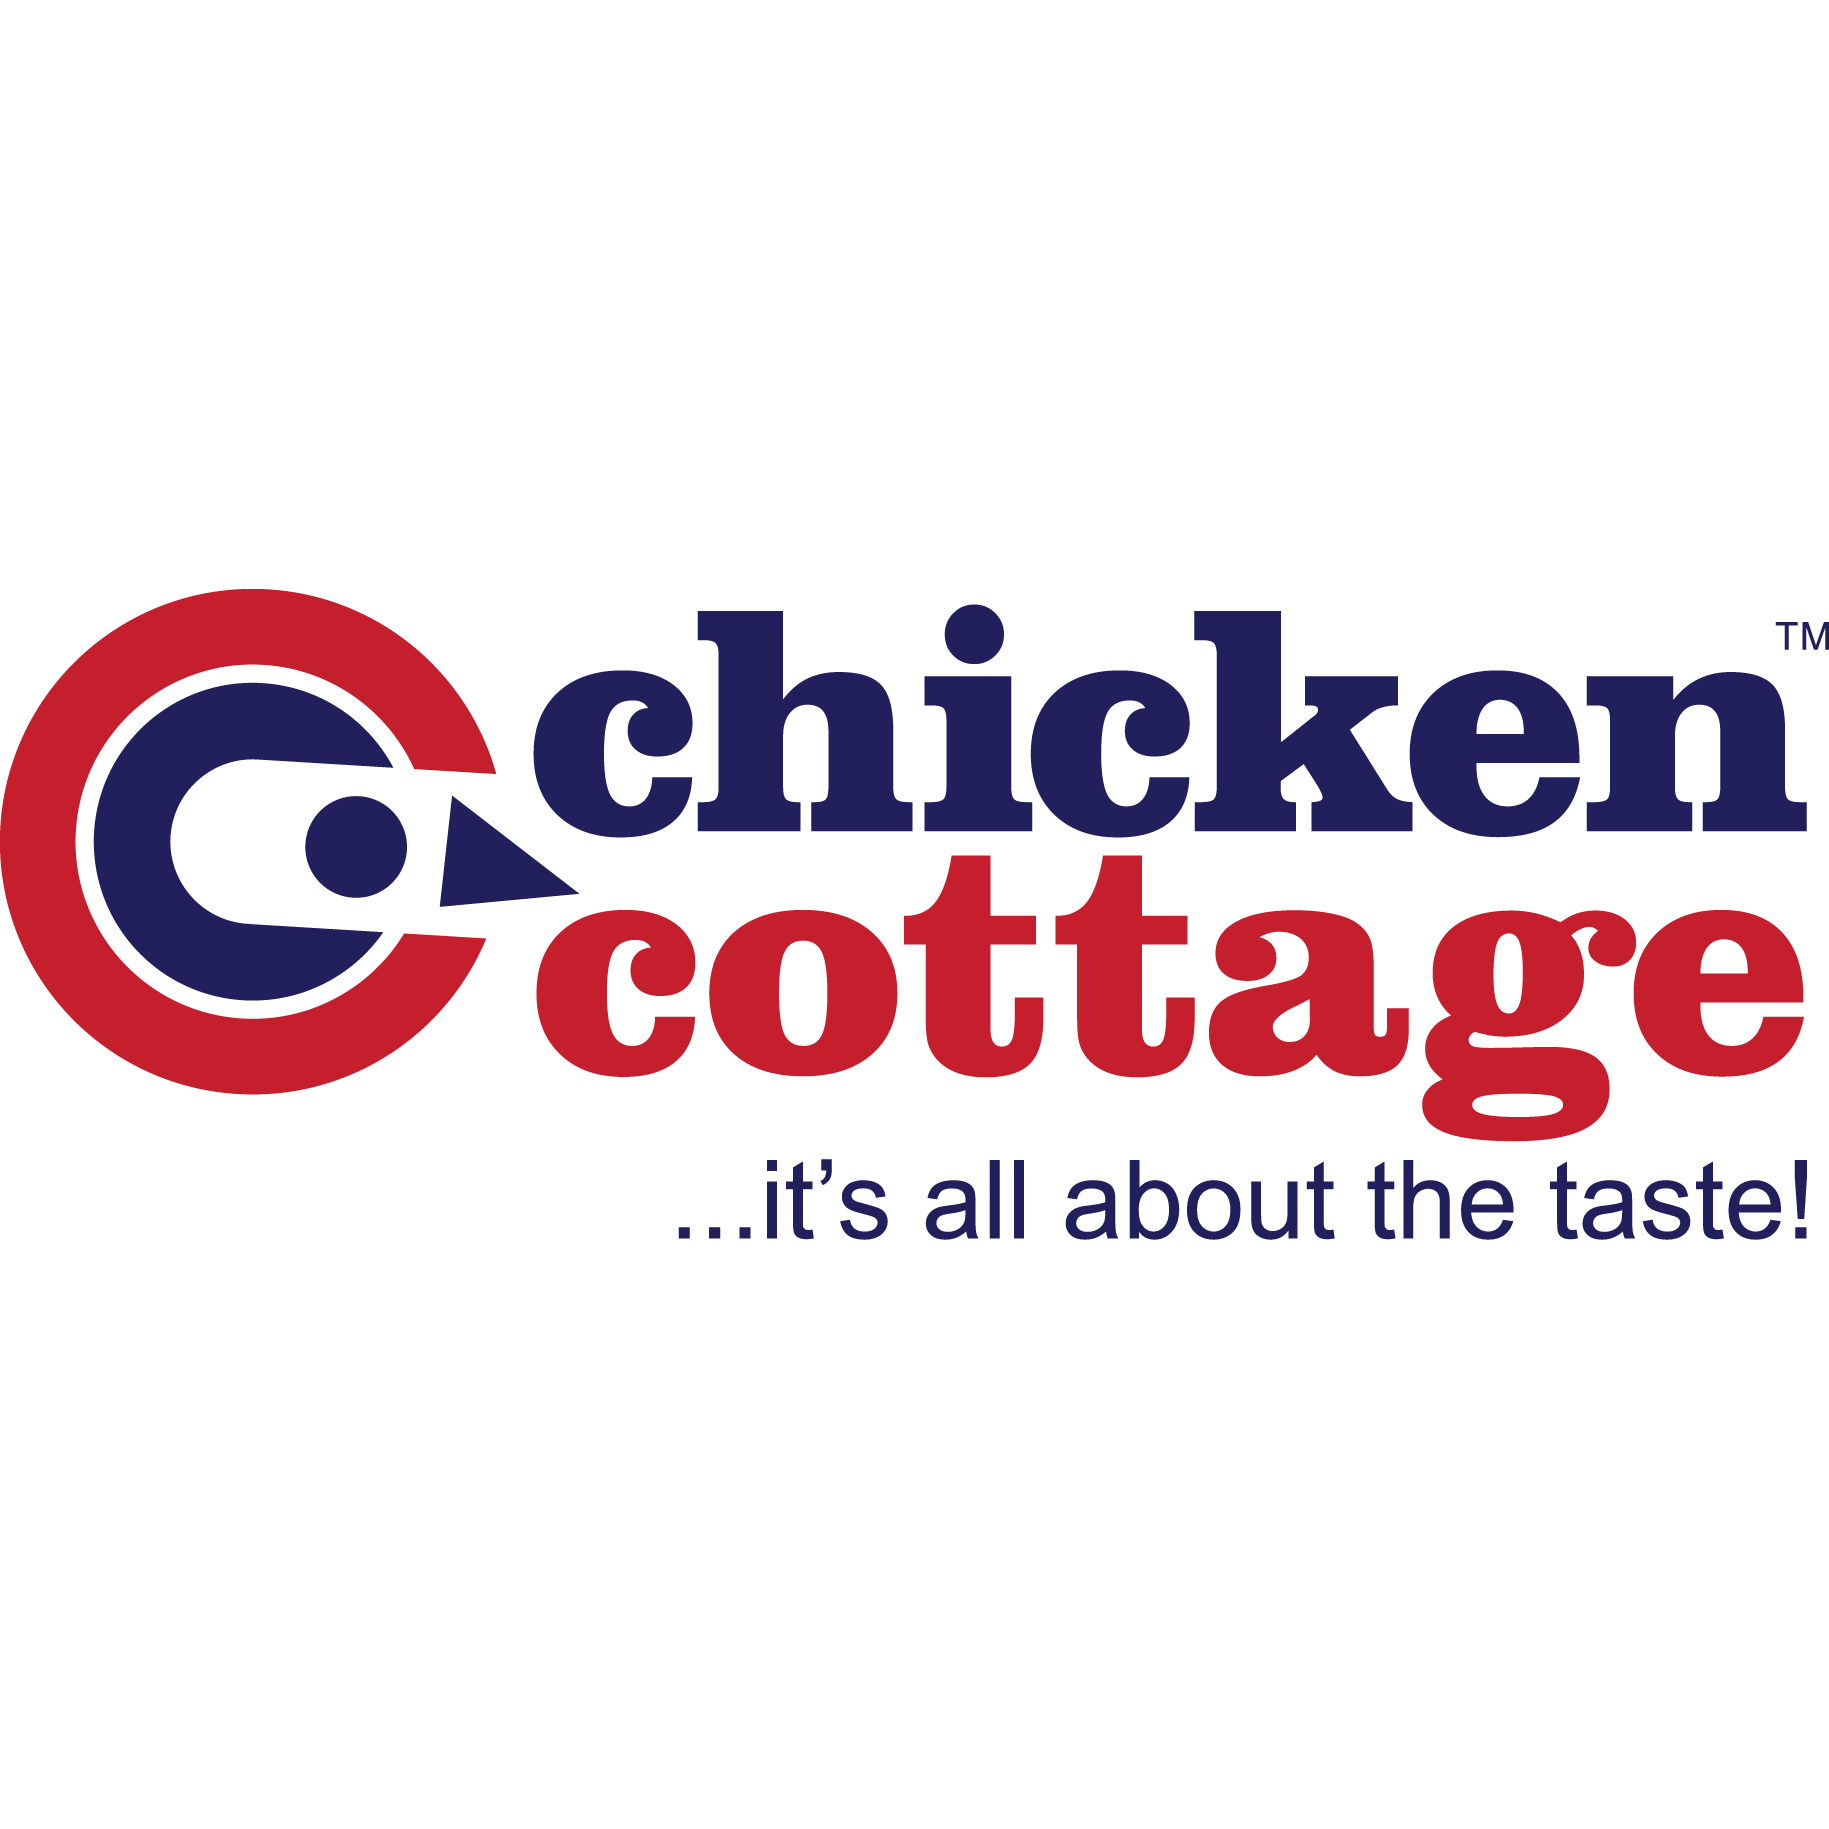 Chicken Cottage Franchise